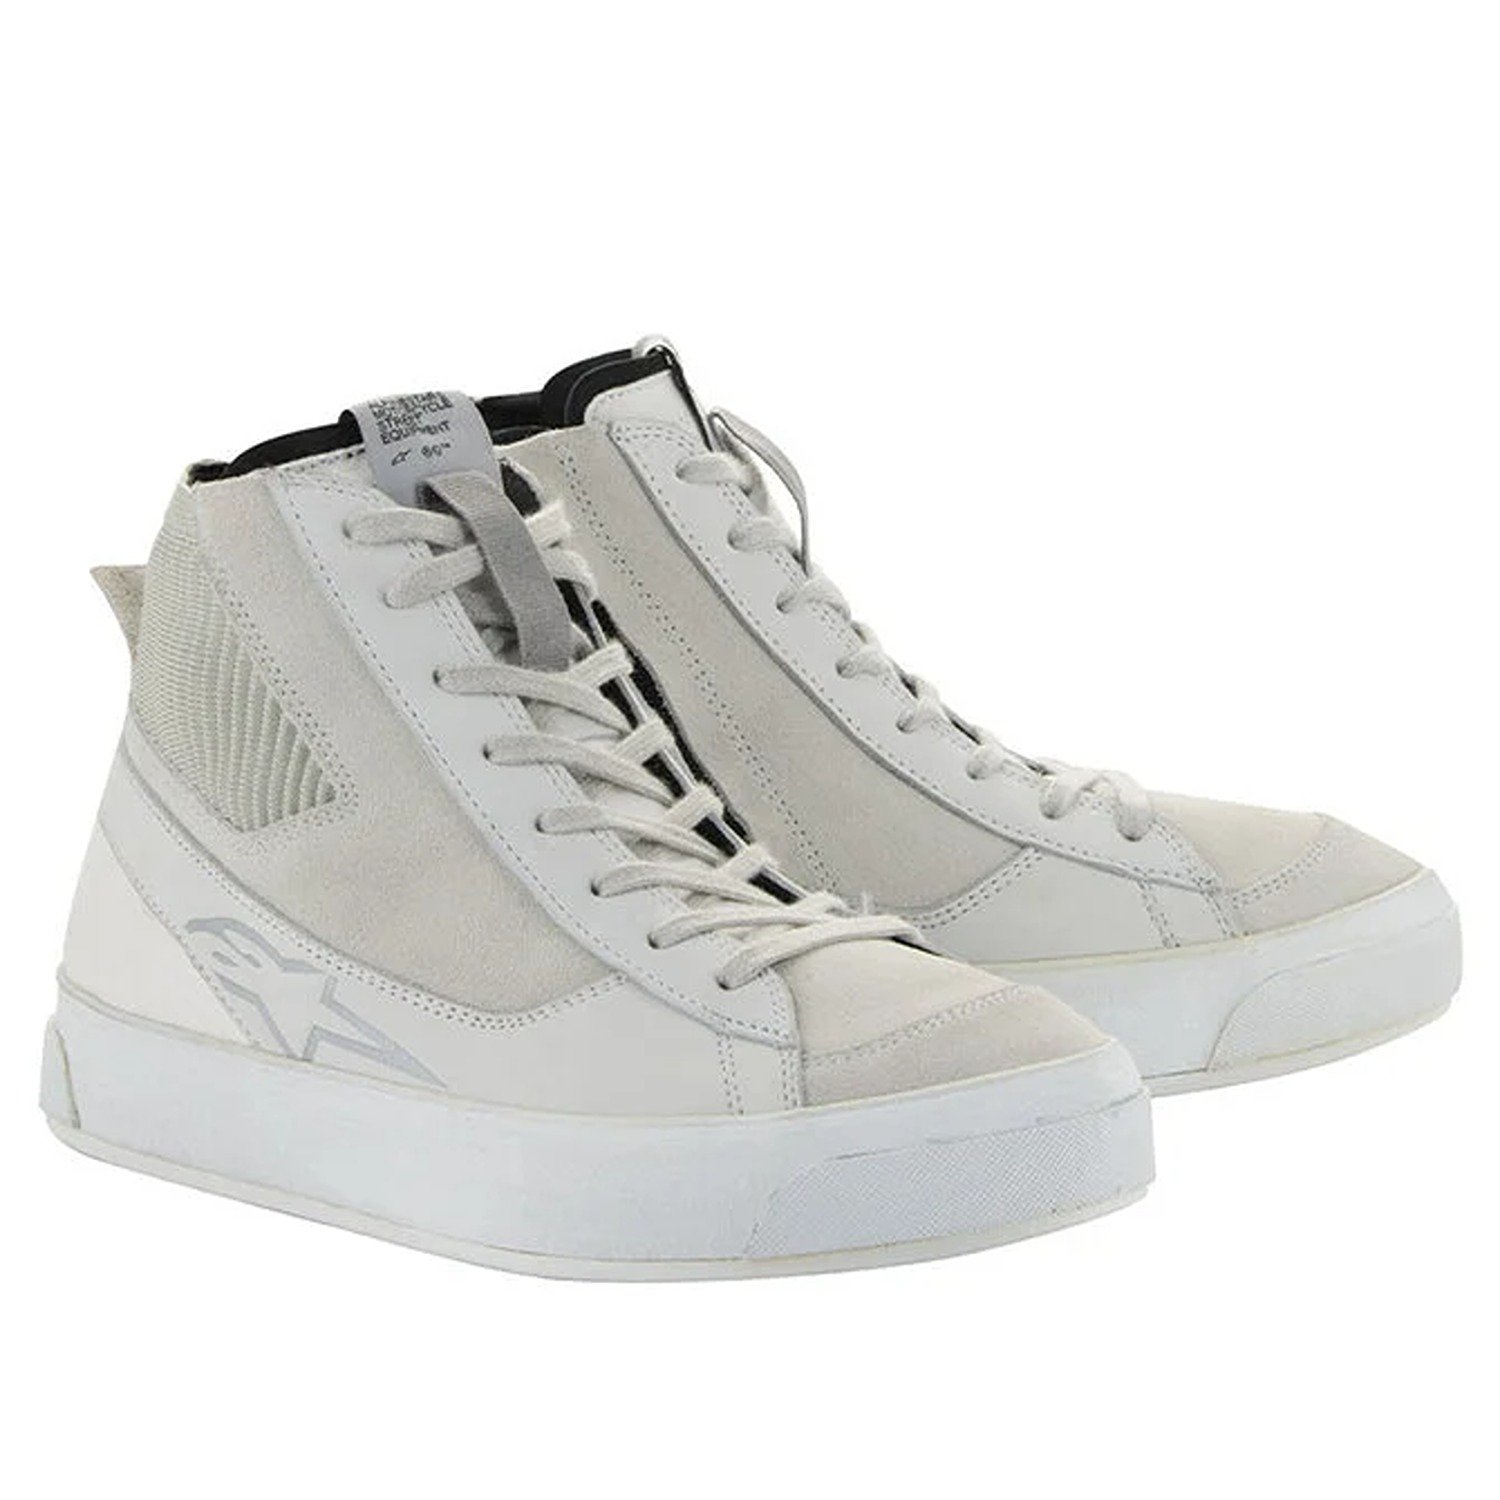 Image of Alpinestars Stella Stated Podium Shoes White Cool Gray Size US 95 EN